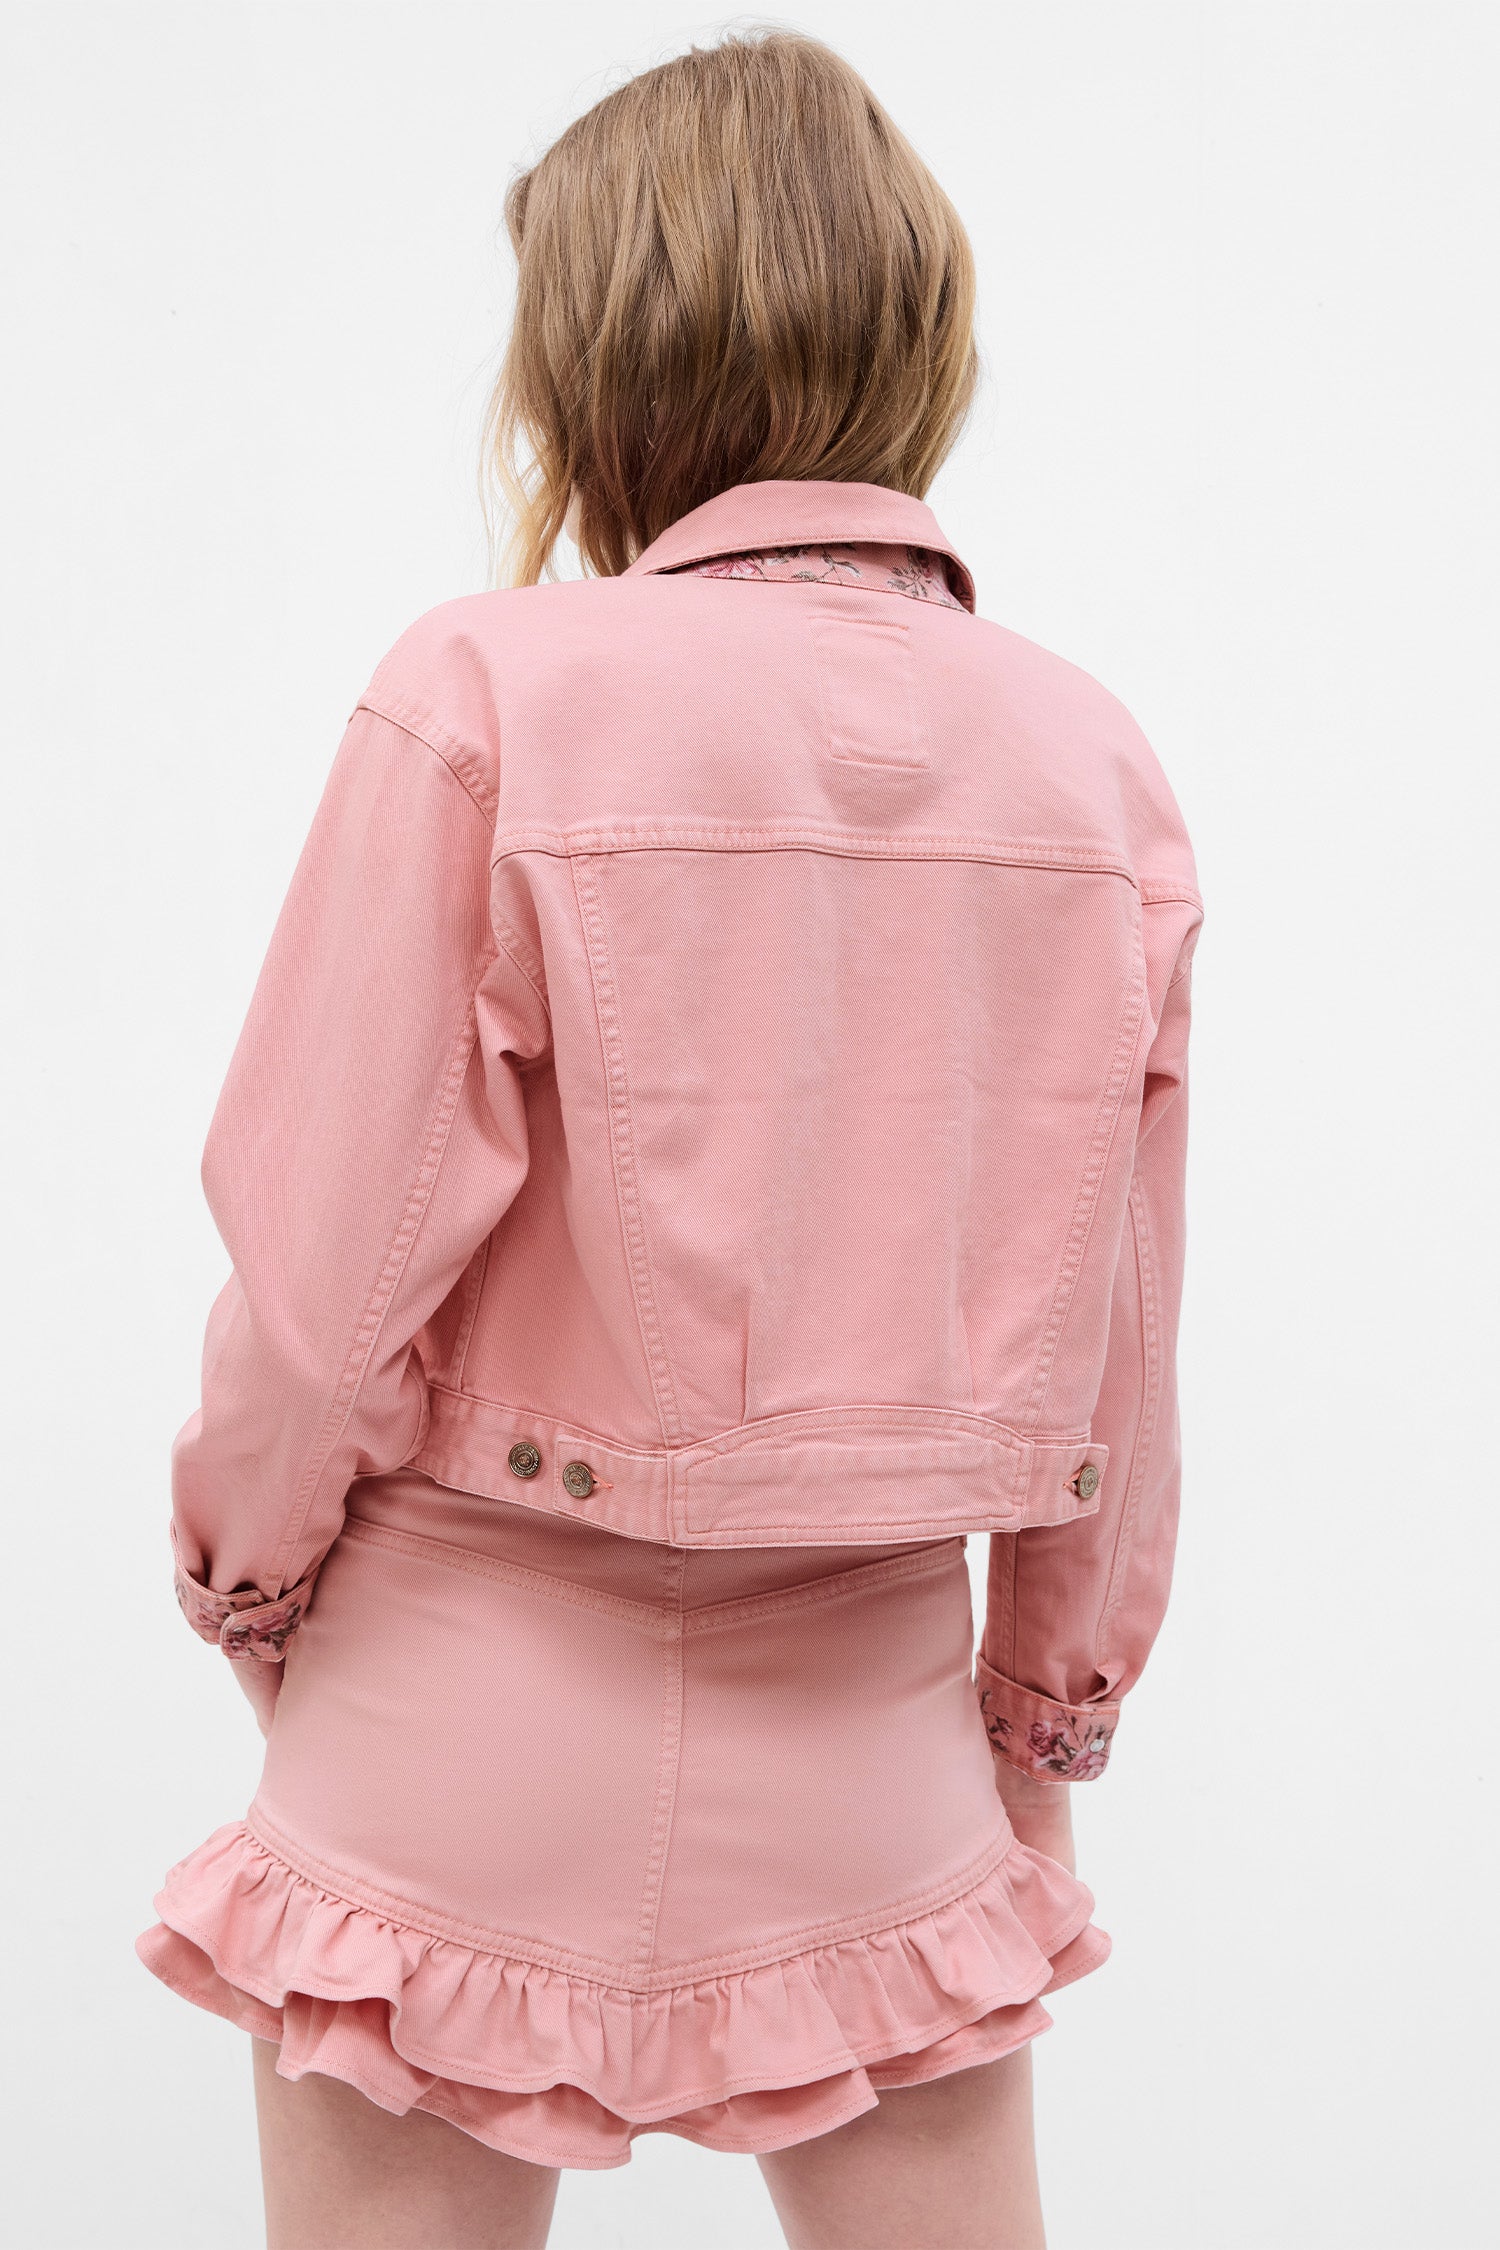 Back image of model wearing pink denim jacket with rosette on chest